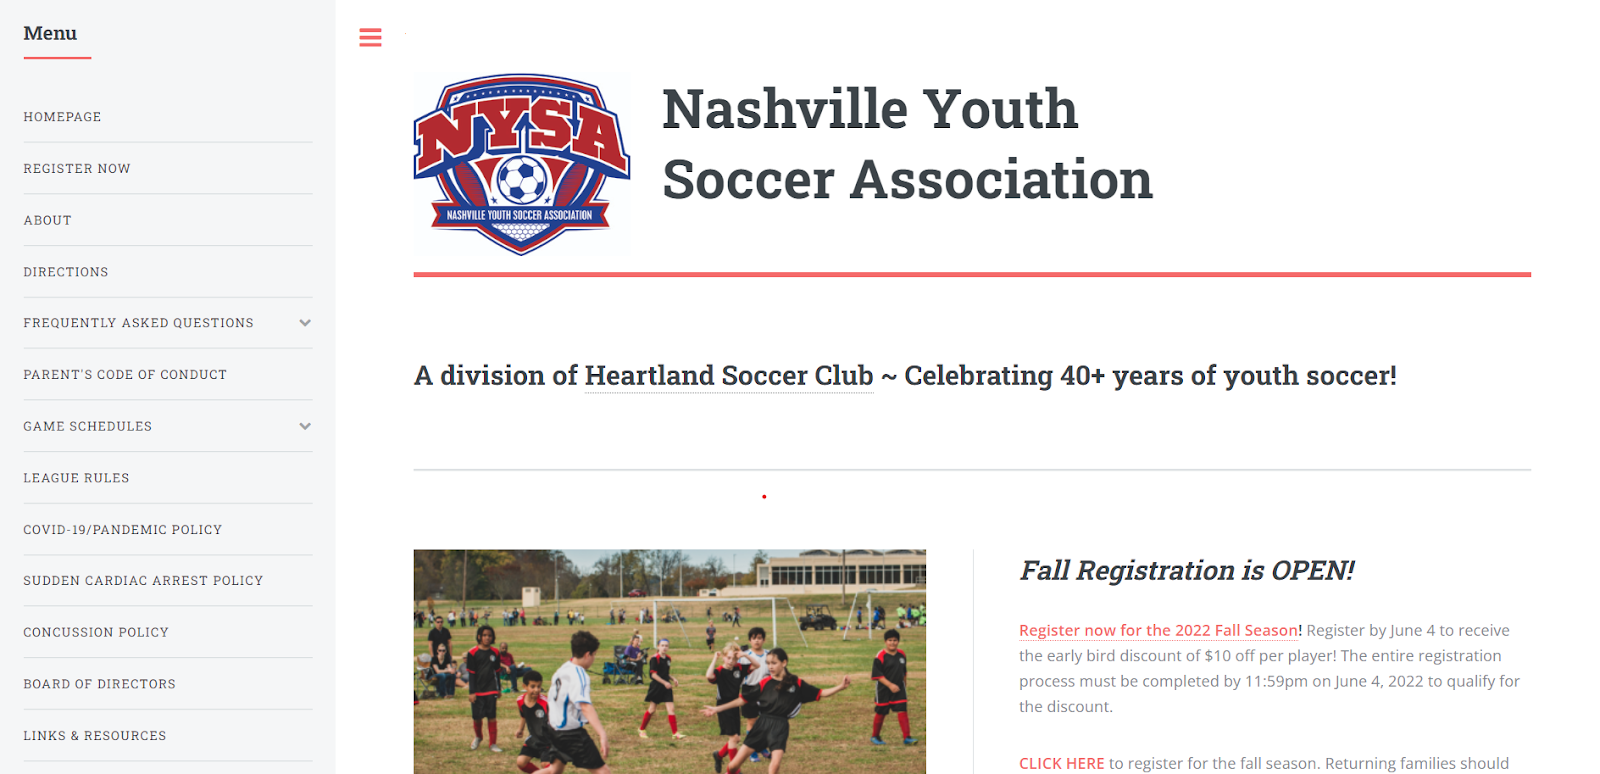 Nashville Youth Soccer Association